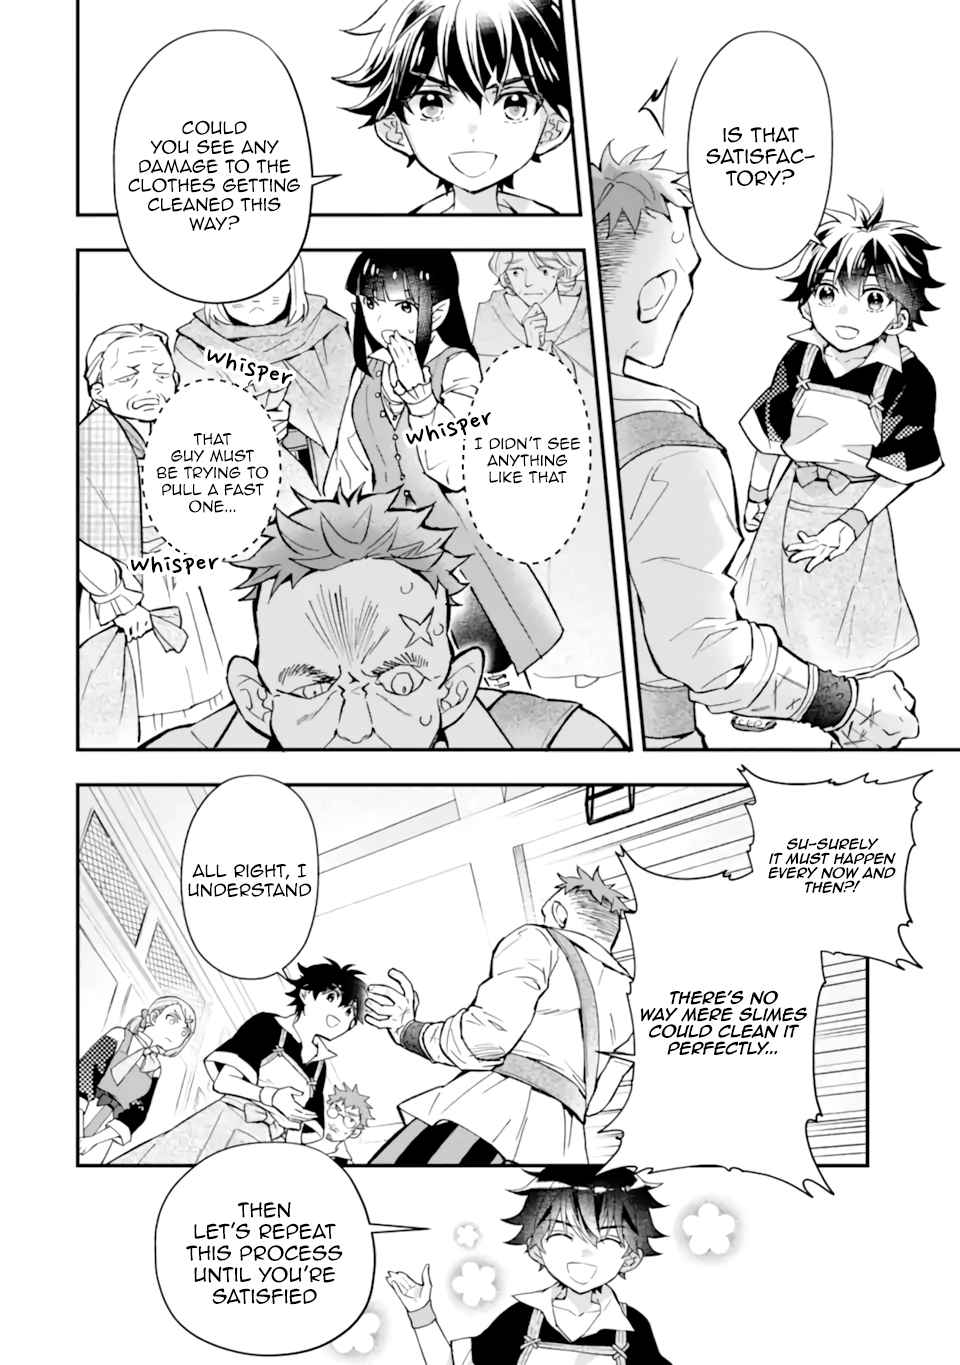 Kamitachi ni Hirowareta Otoko - Chapter 48.2 - Page 1 - Raw Manga